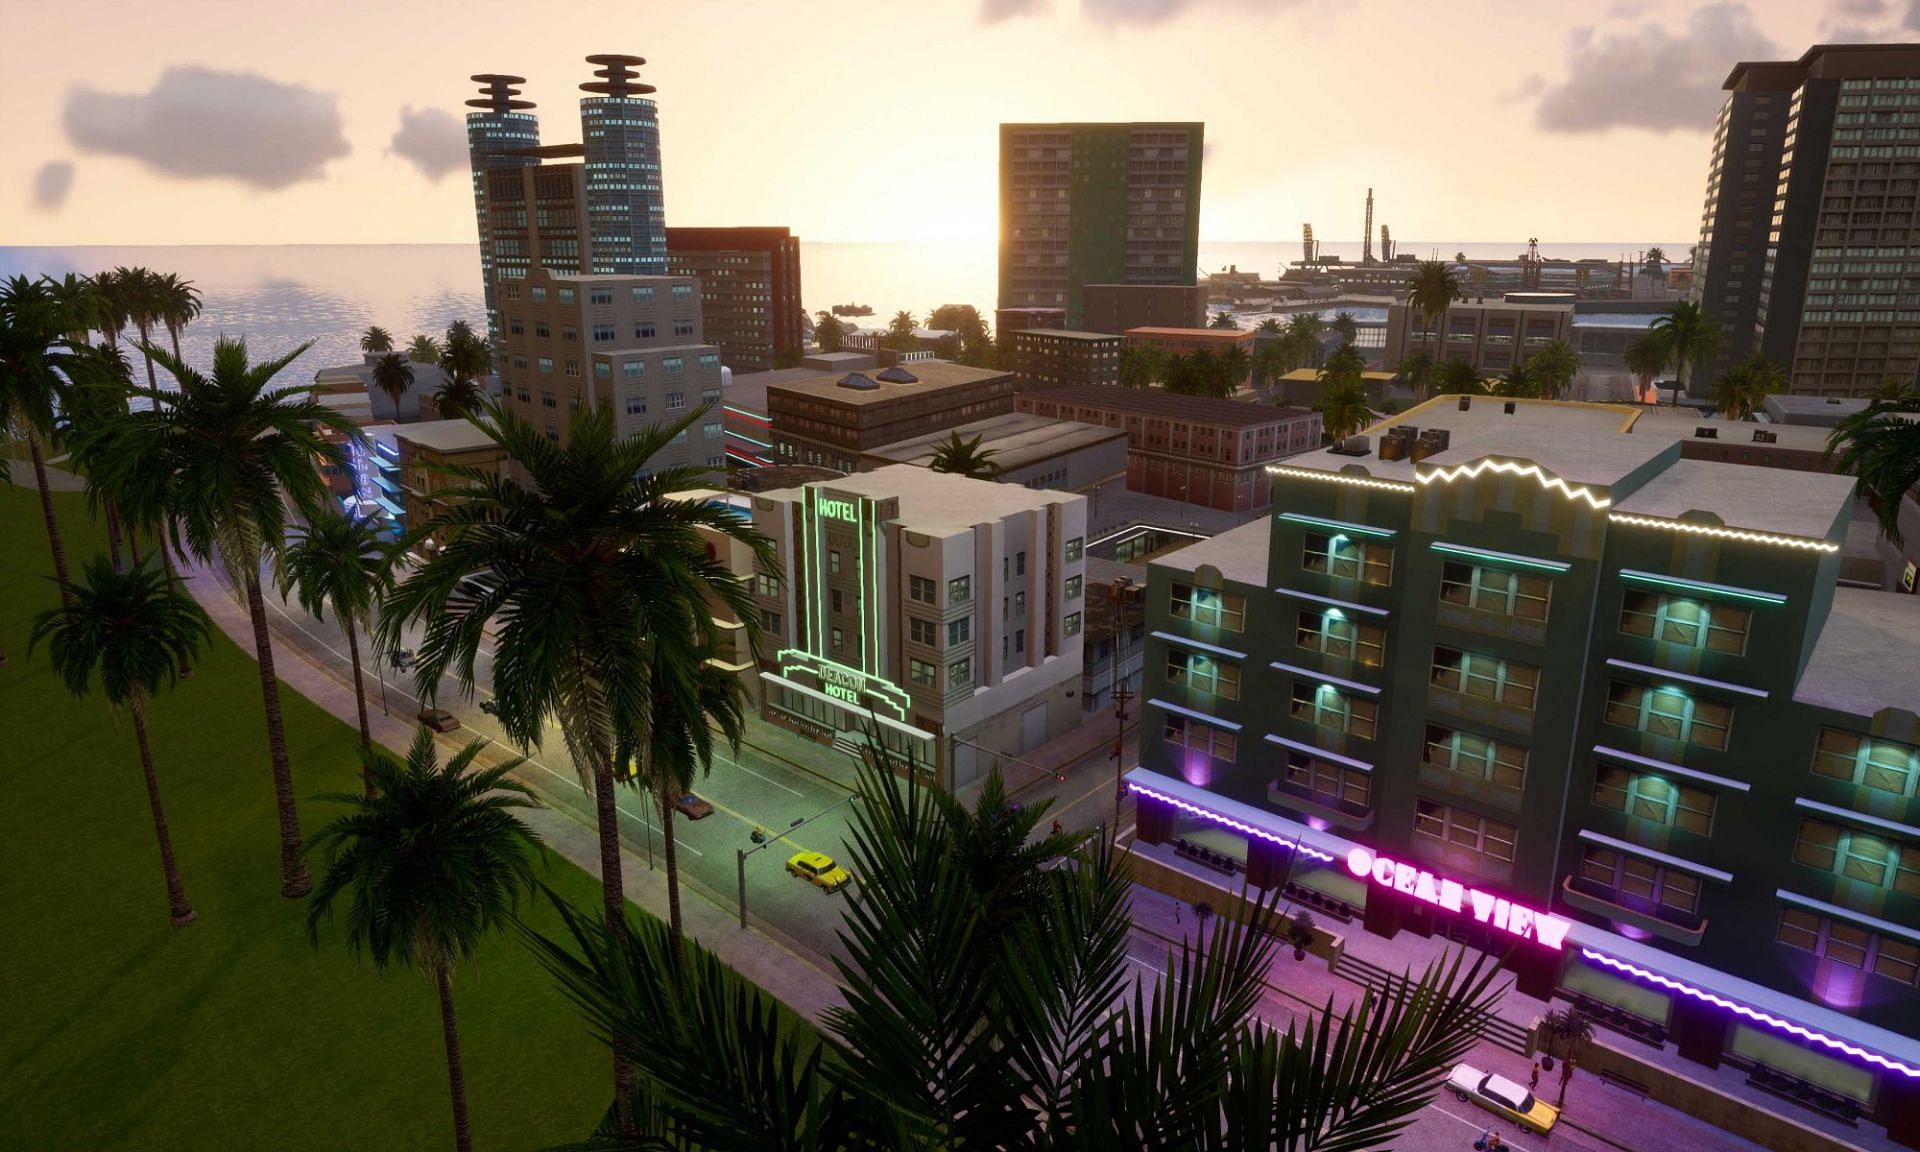 Vice City has never looked so beautiful (Image via Rockstar Games)